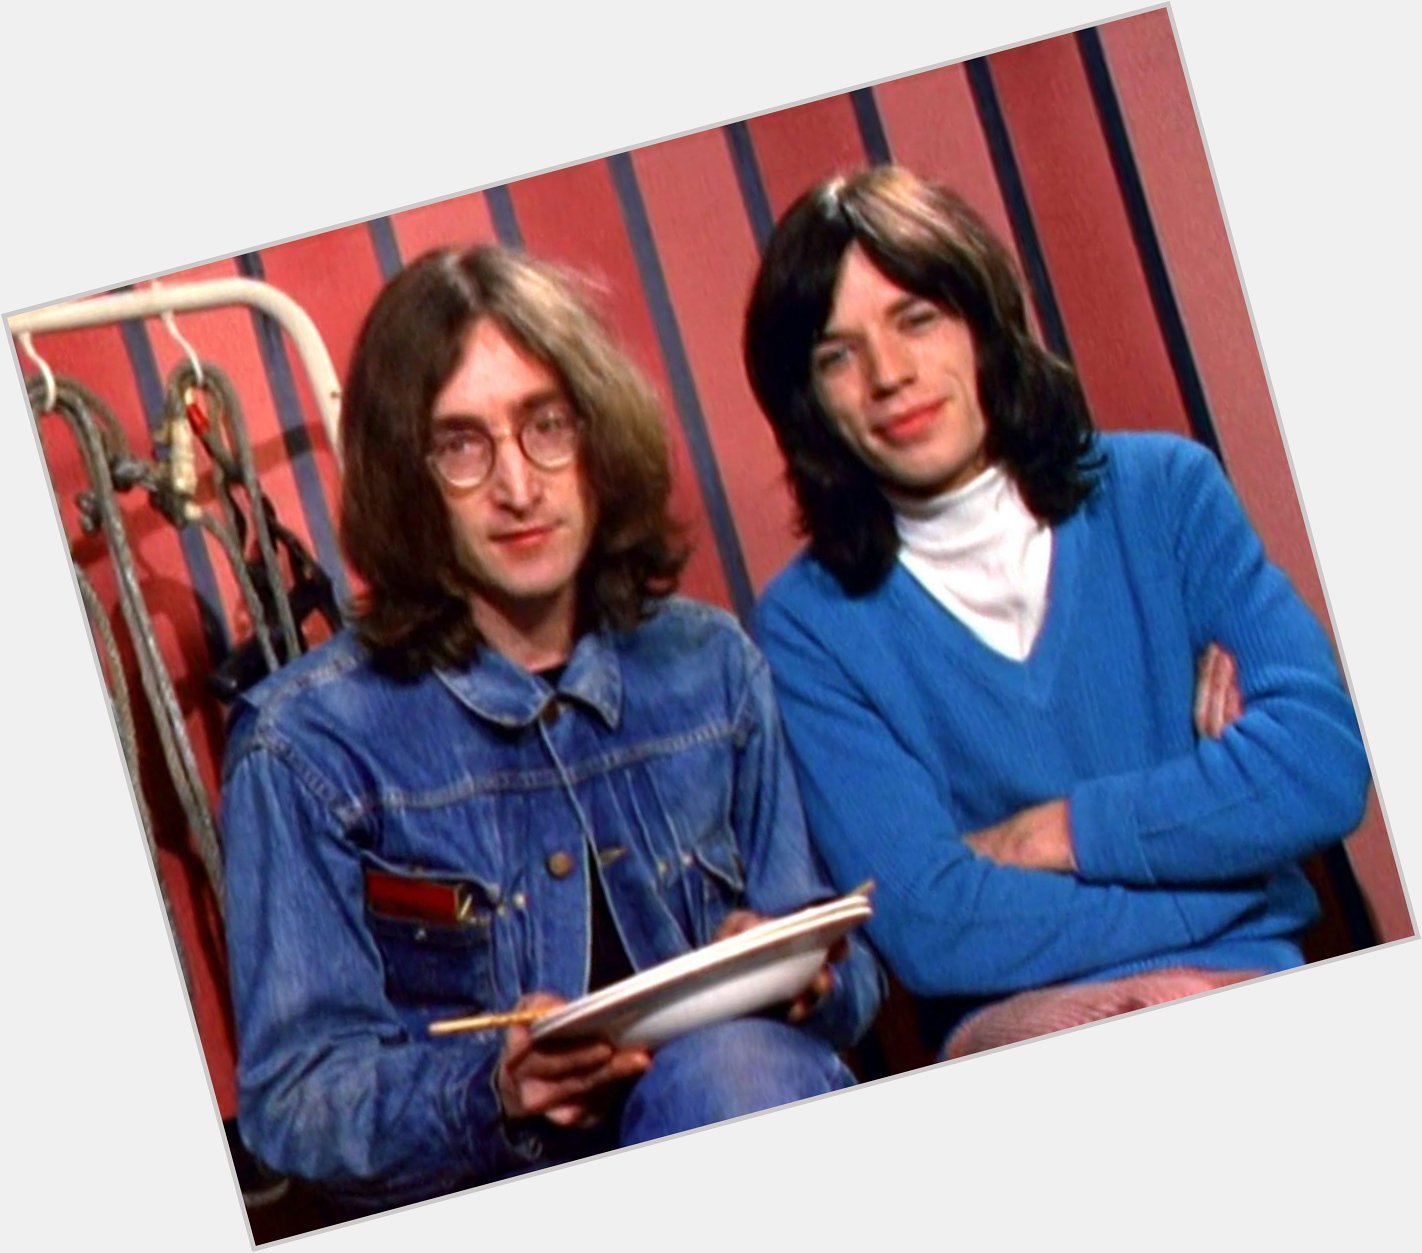 John Lennon and Mick Jagger .
Rock n Roll Circus 
Happy Birthday Mick ! 